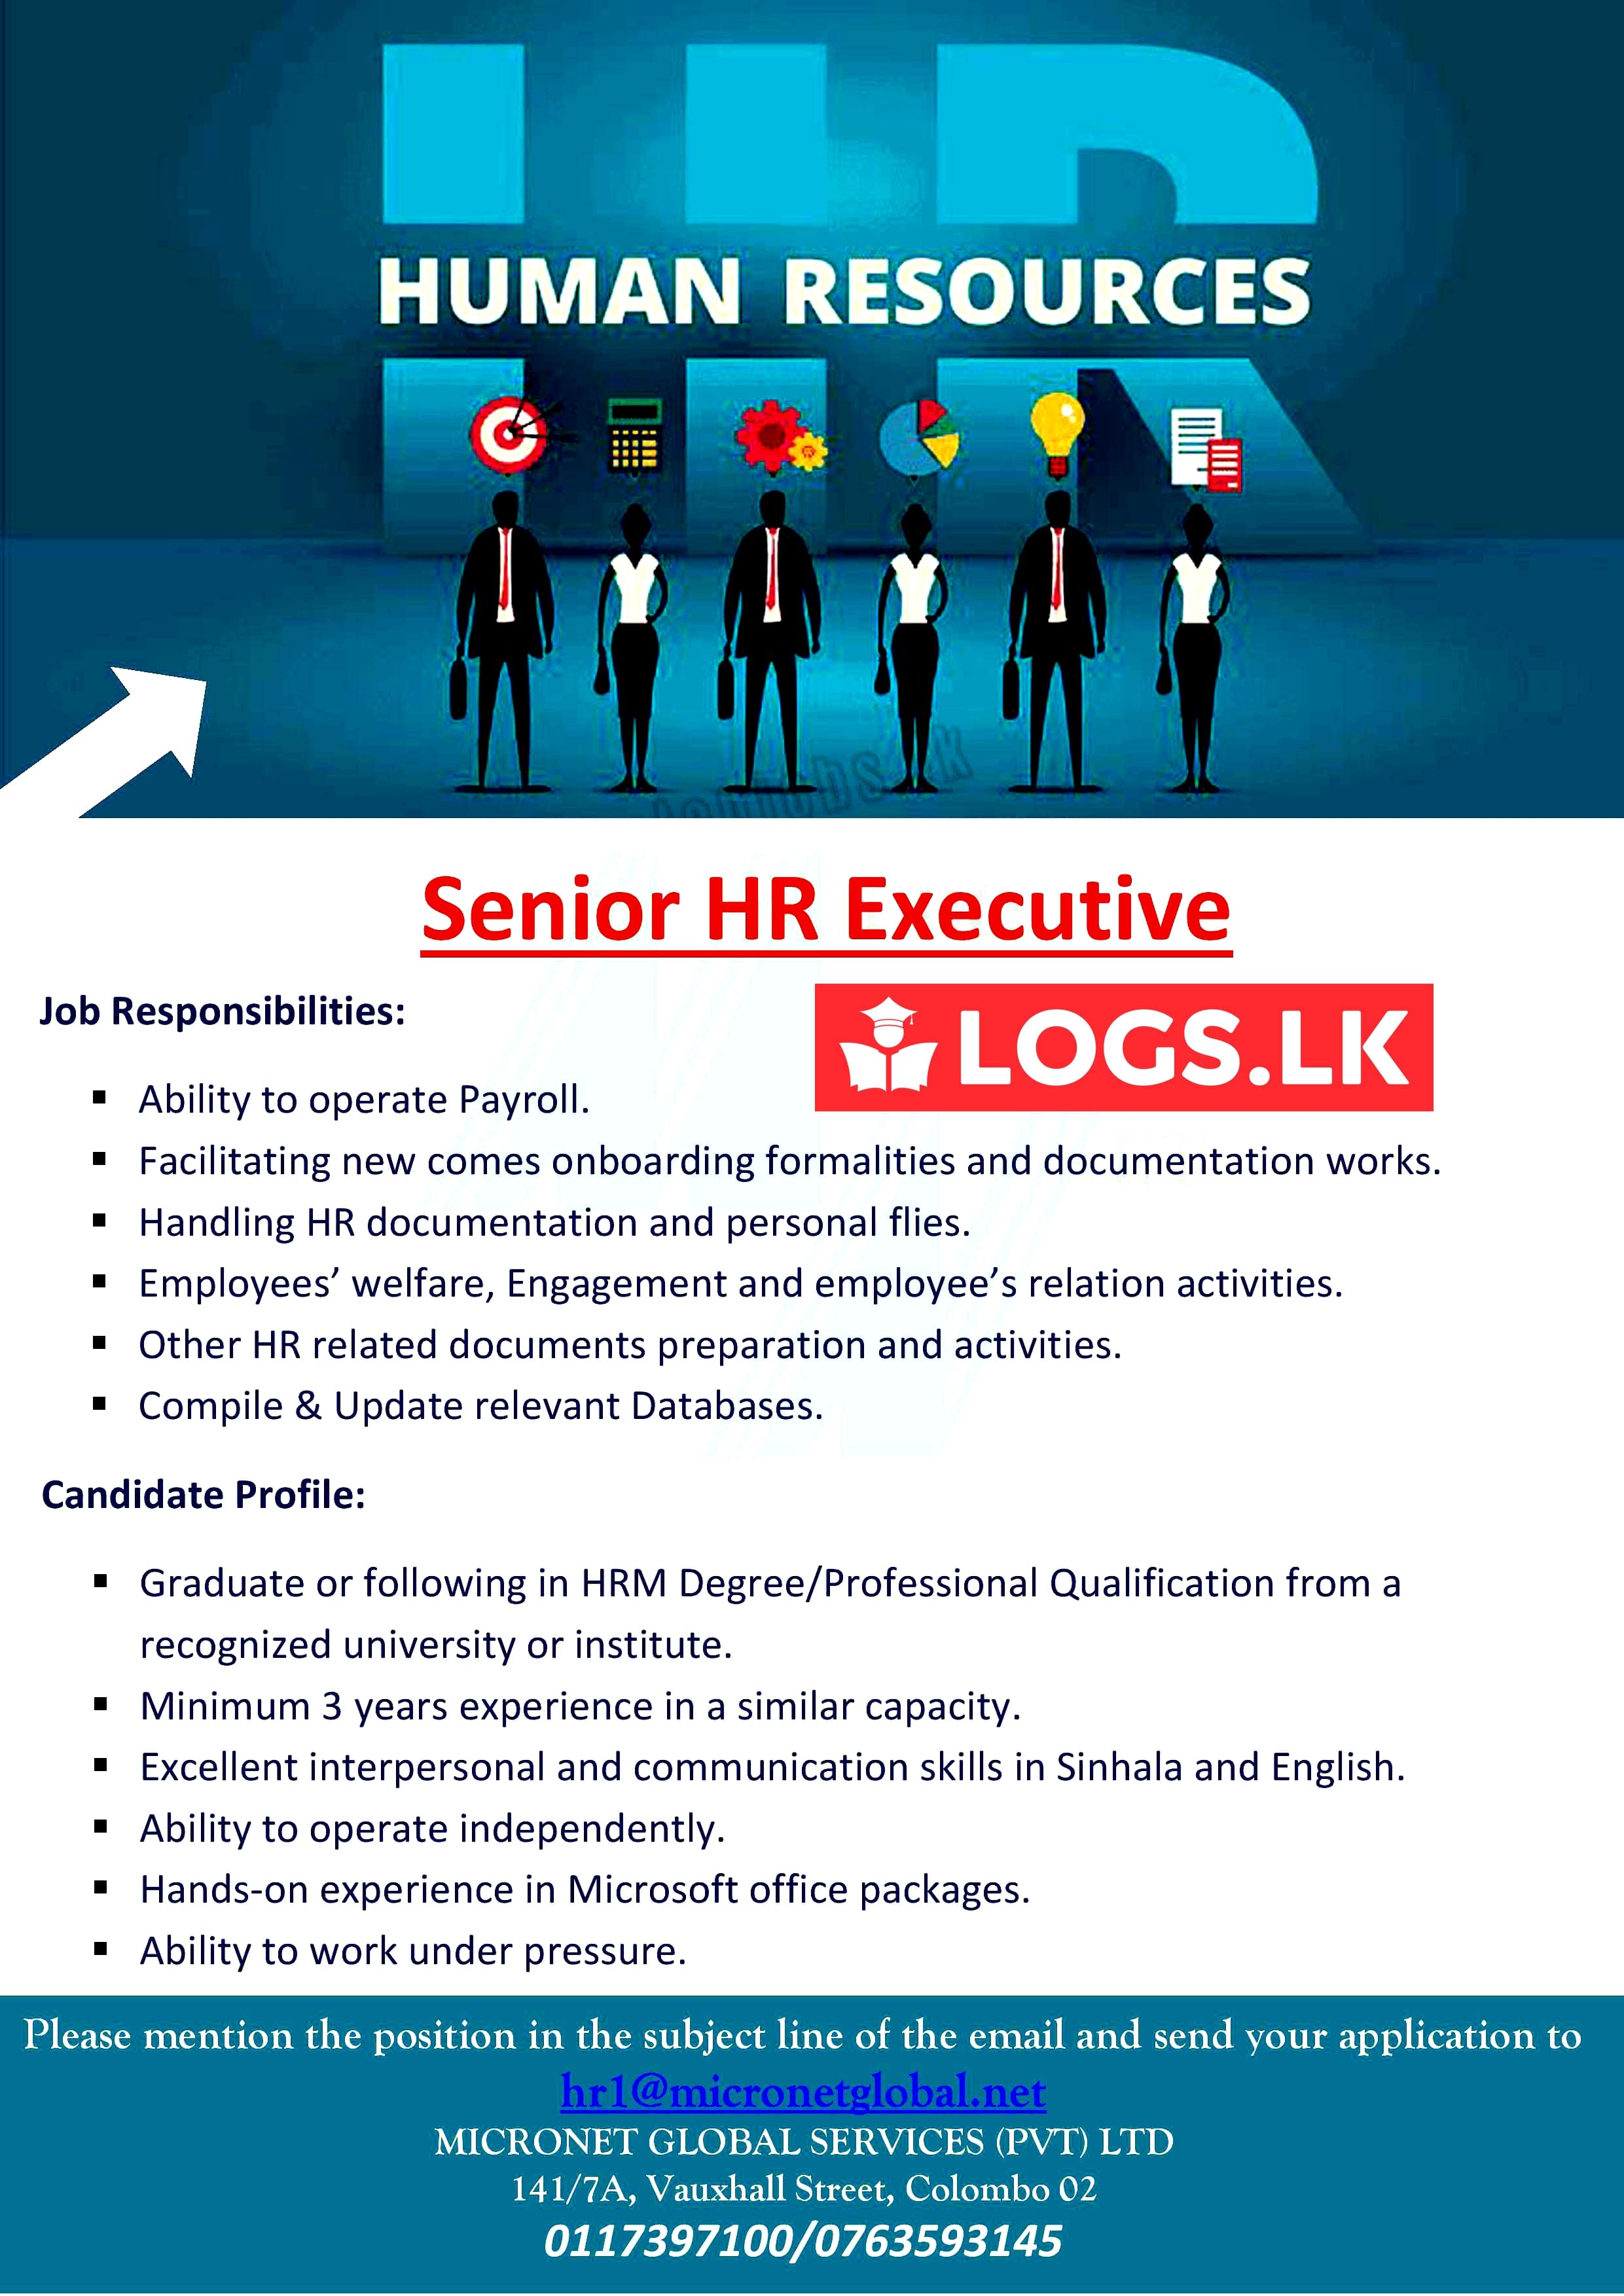 Senior HR Executive Job Vacancy – Micronet Global Services Jobs Vacancies